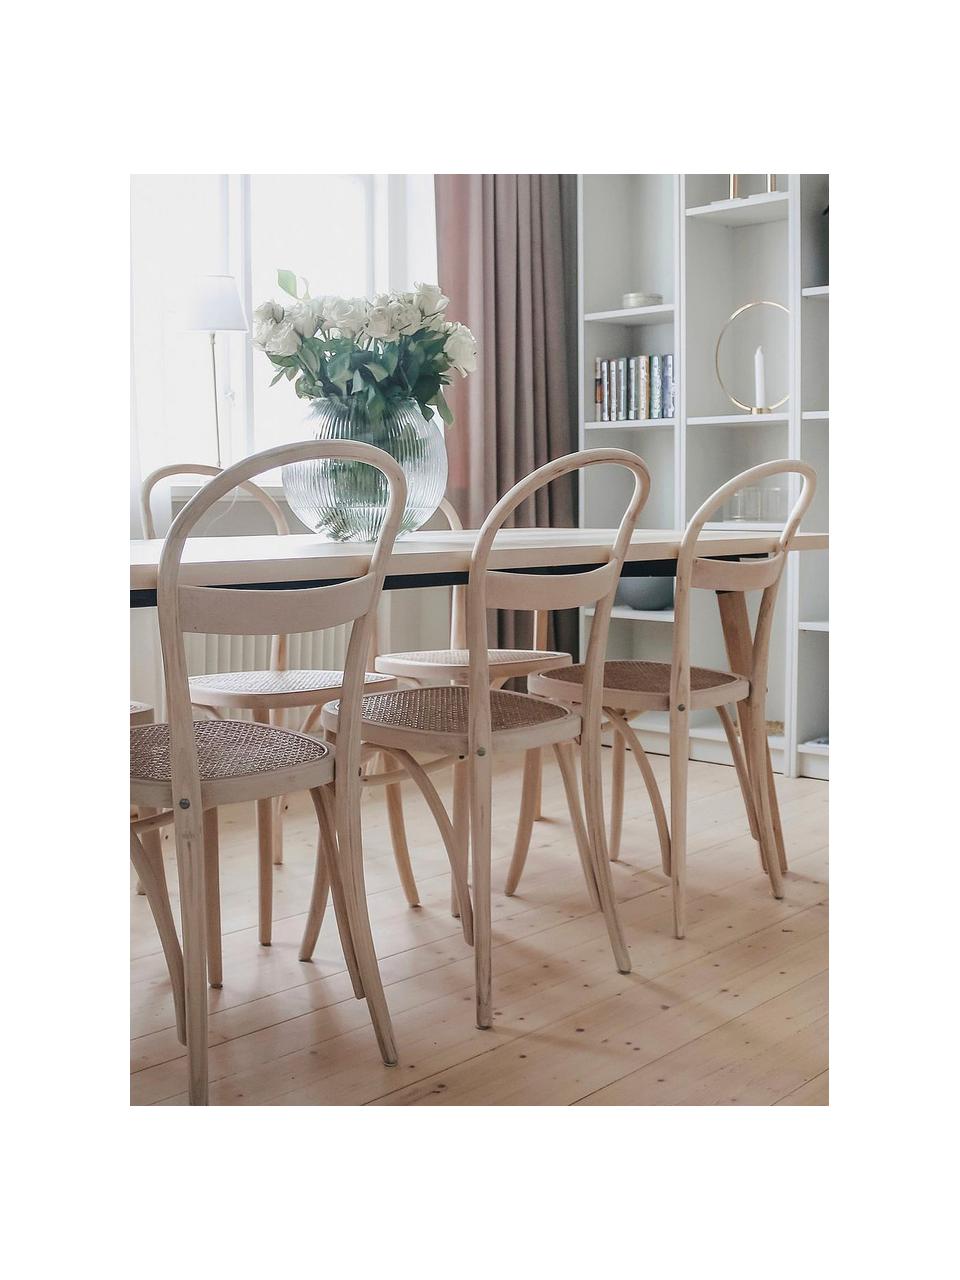 Houten stoelen Rippats, 2 stuks, Berkenhout, rotan, Berkenhoutkleurig, rotankleurig, B 39 x D 53 cm